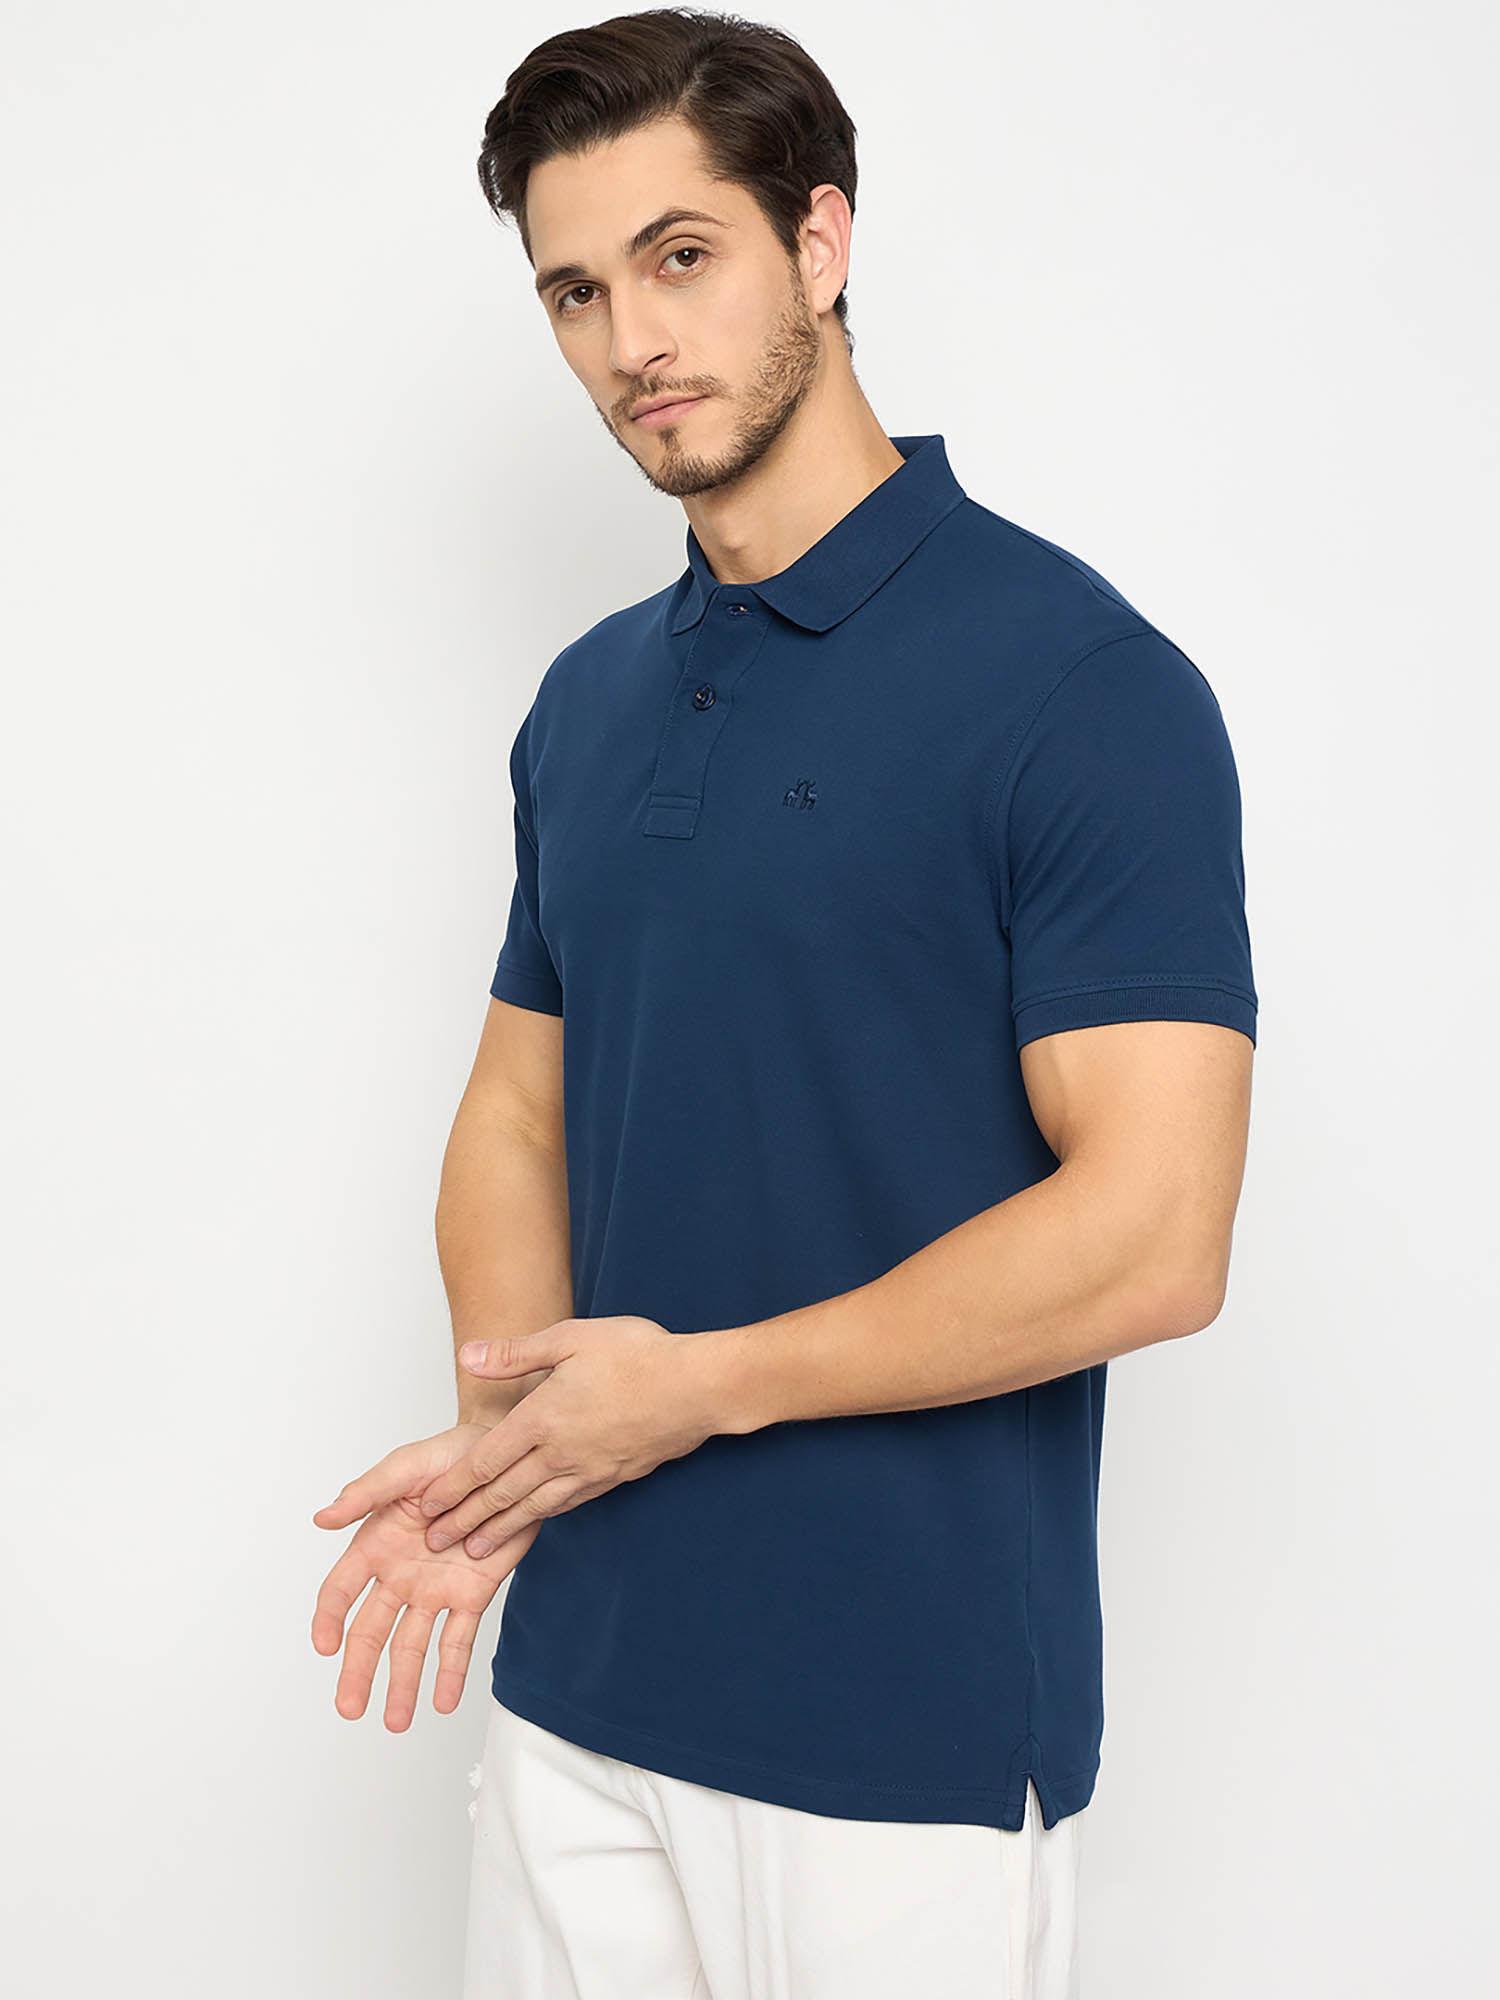 mens half sleeves blue polo t-shirt